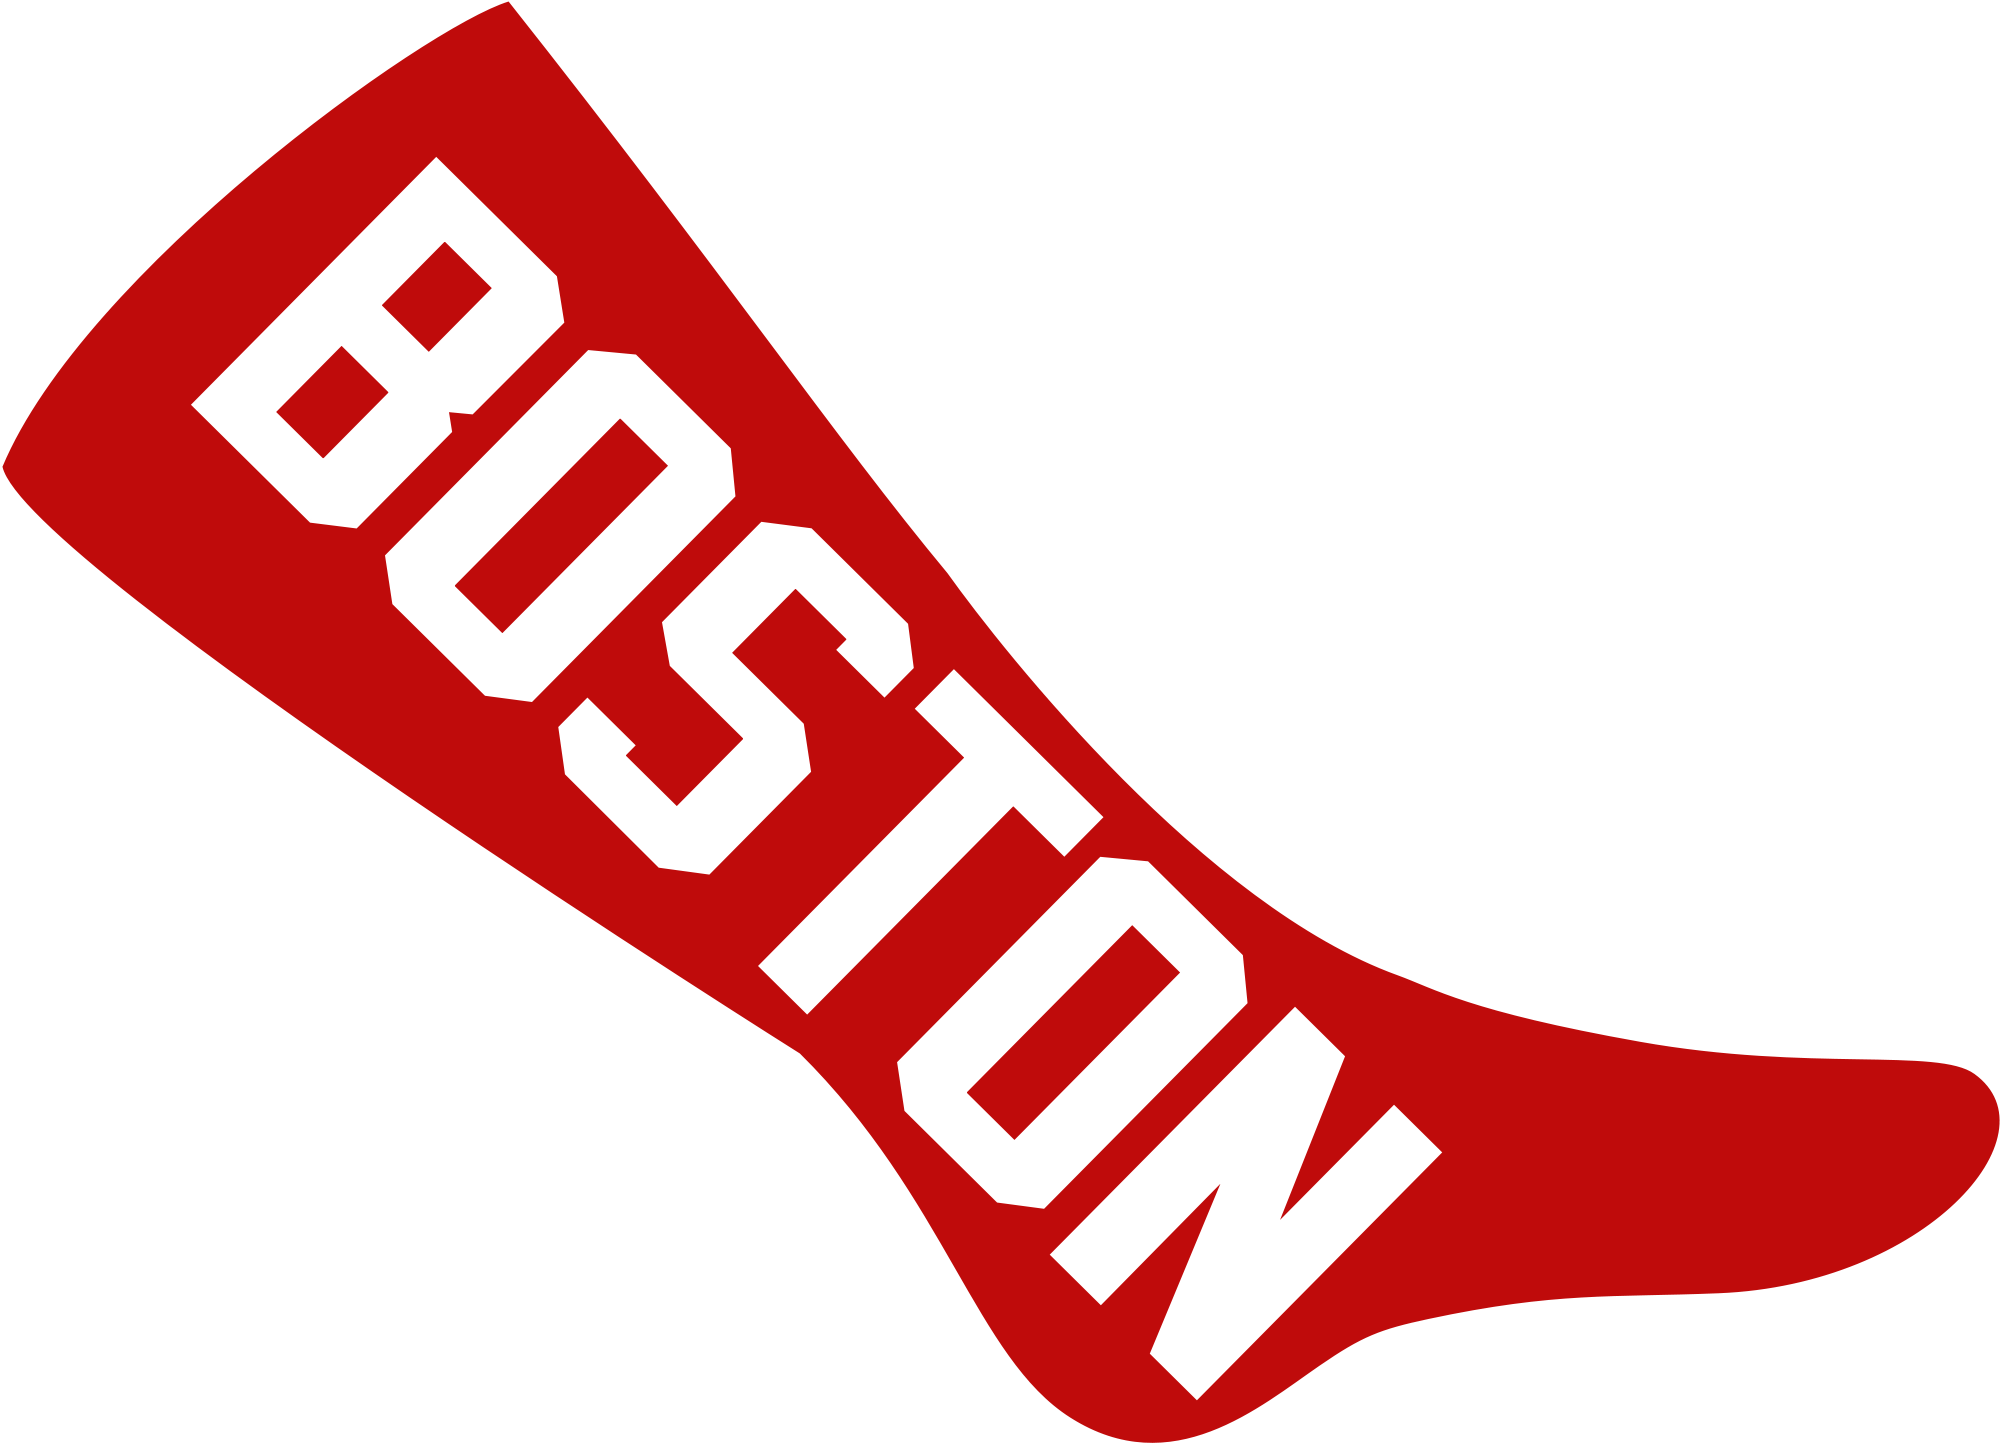 Red Sox Logo Jpg | Free Download Clip Art | Free Clip Art | on ...